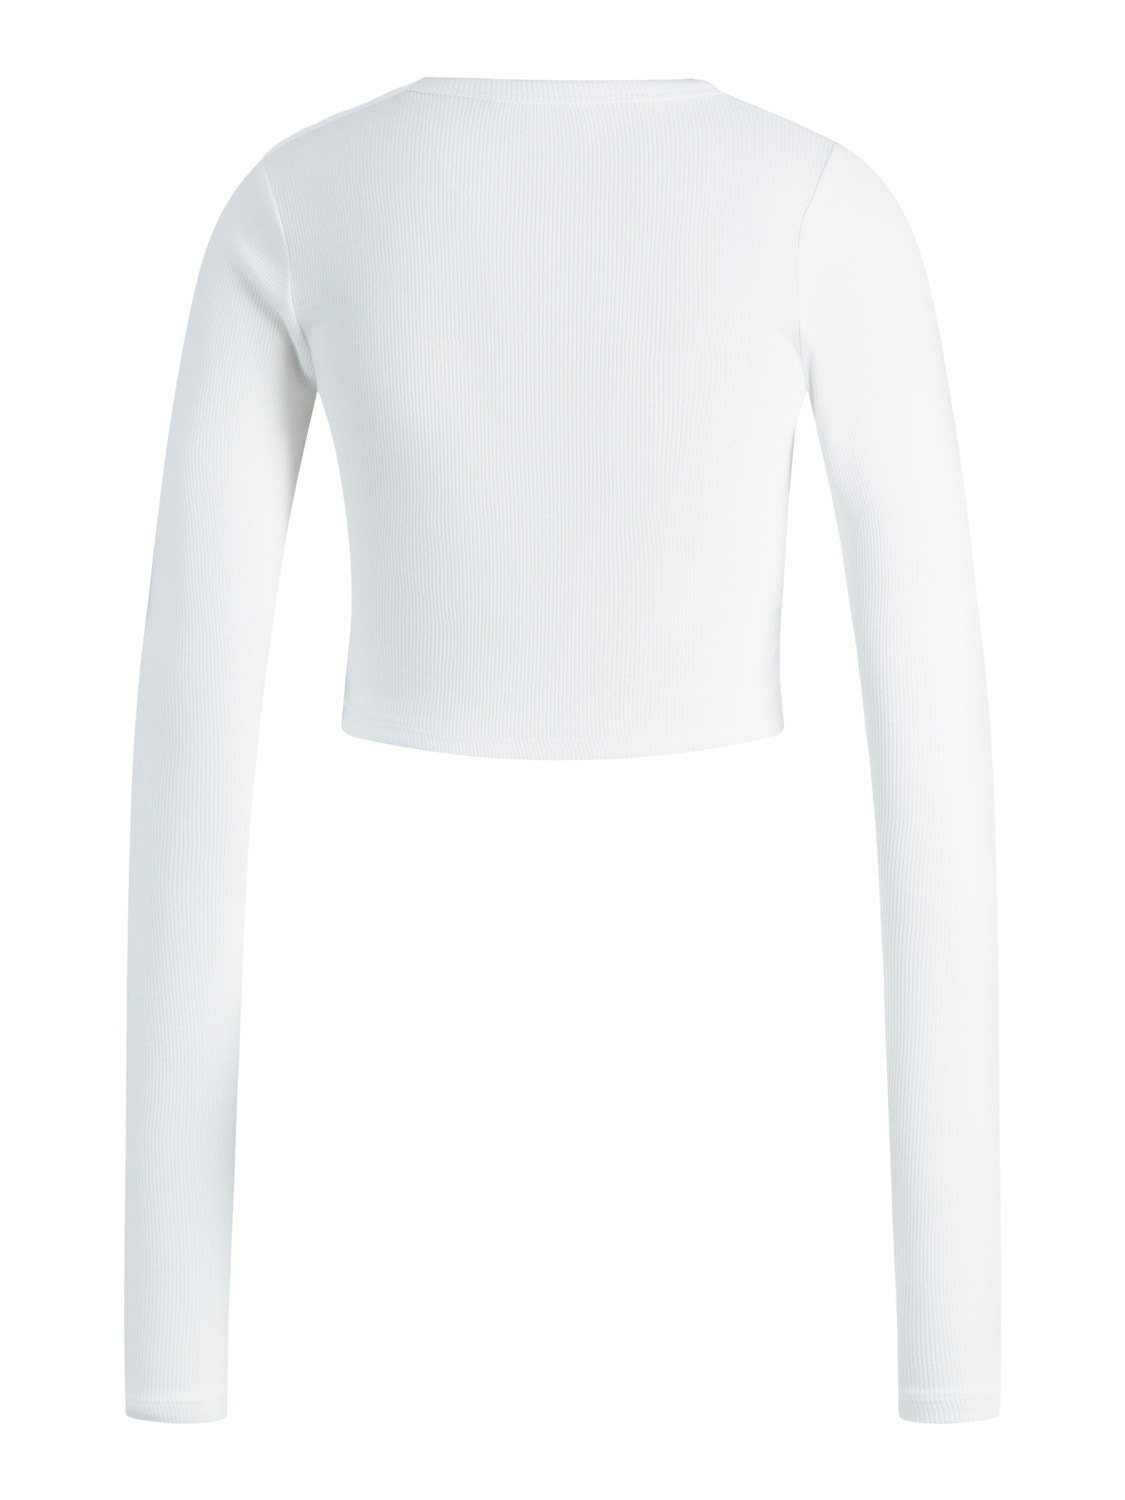 JJXX JXFELINE T-shirt -Bright White - 12200402